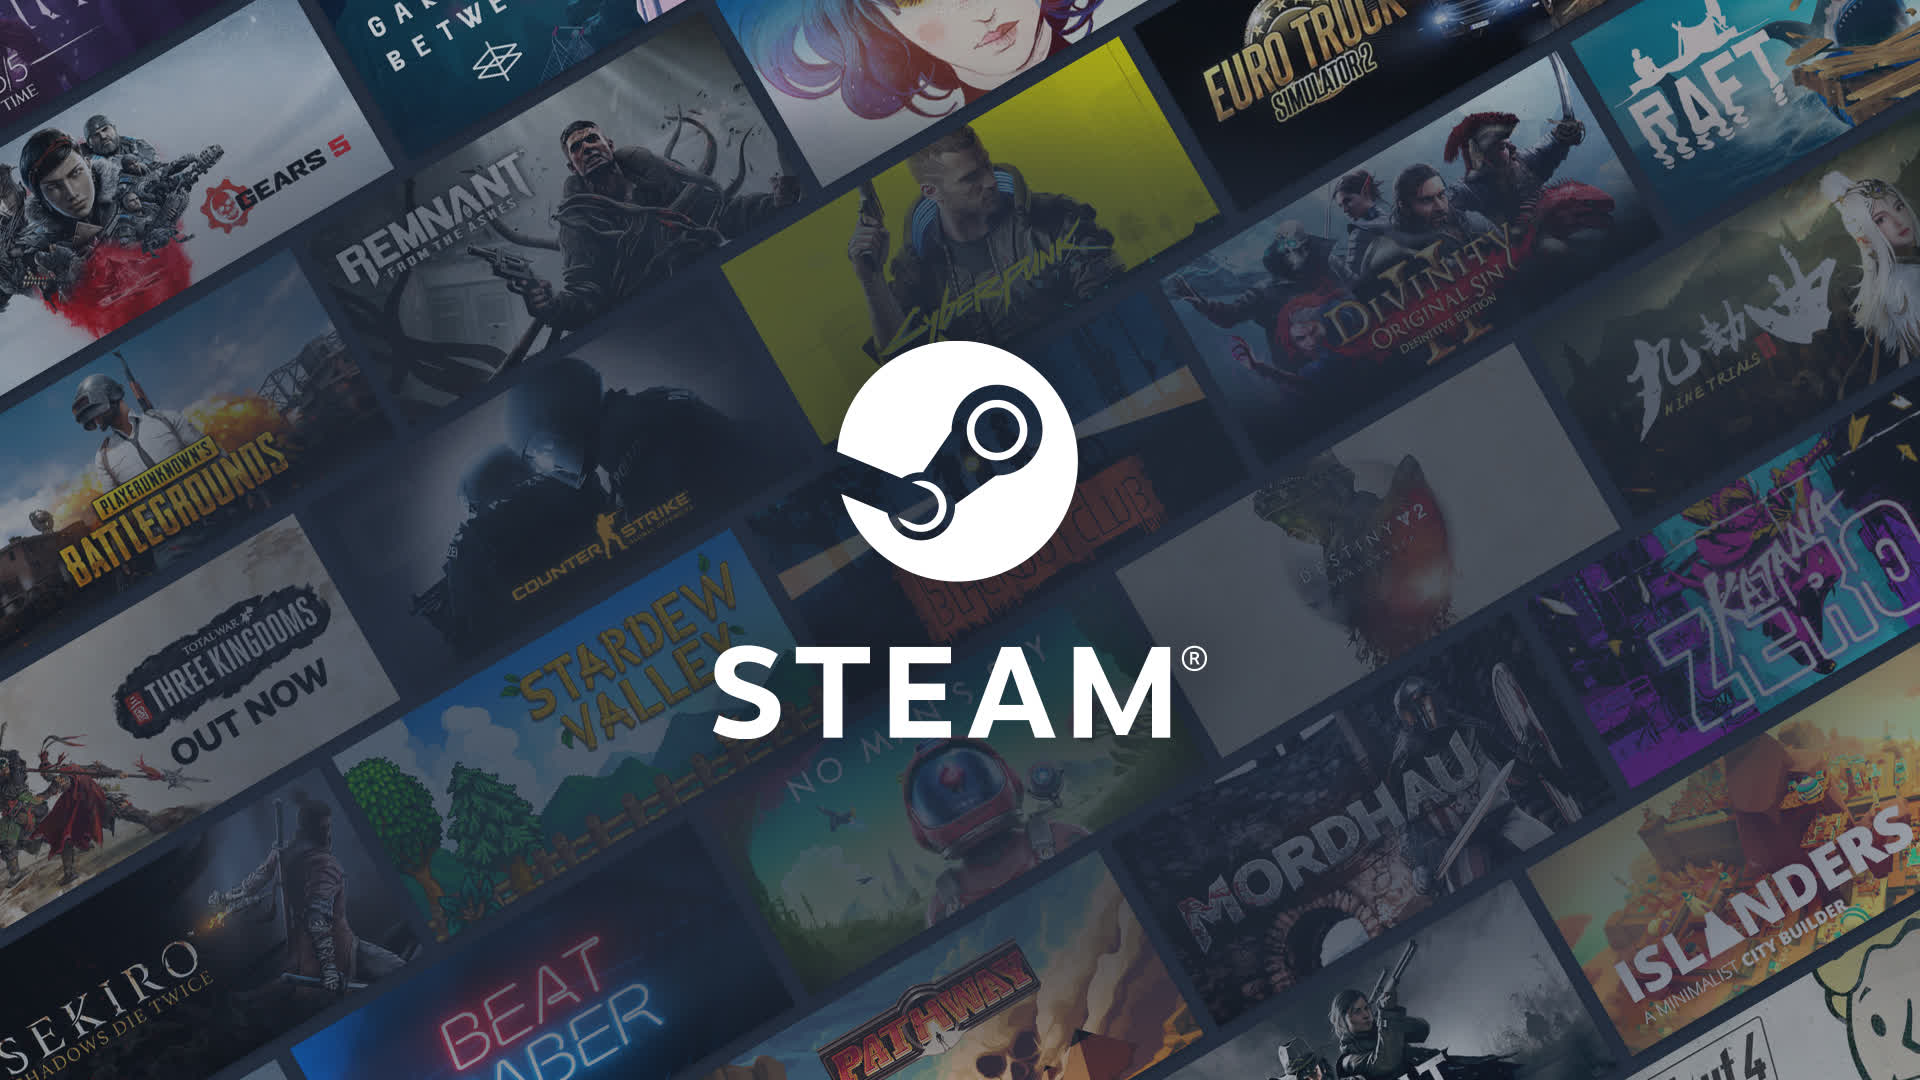 Valve will face antitrust litigation surrounding Steam